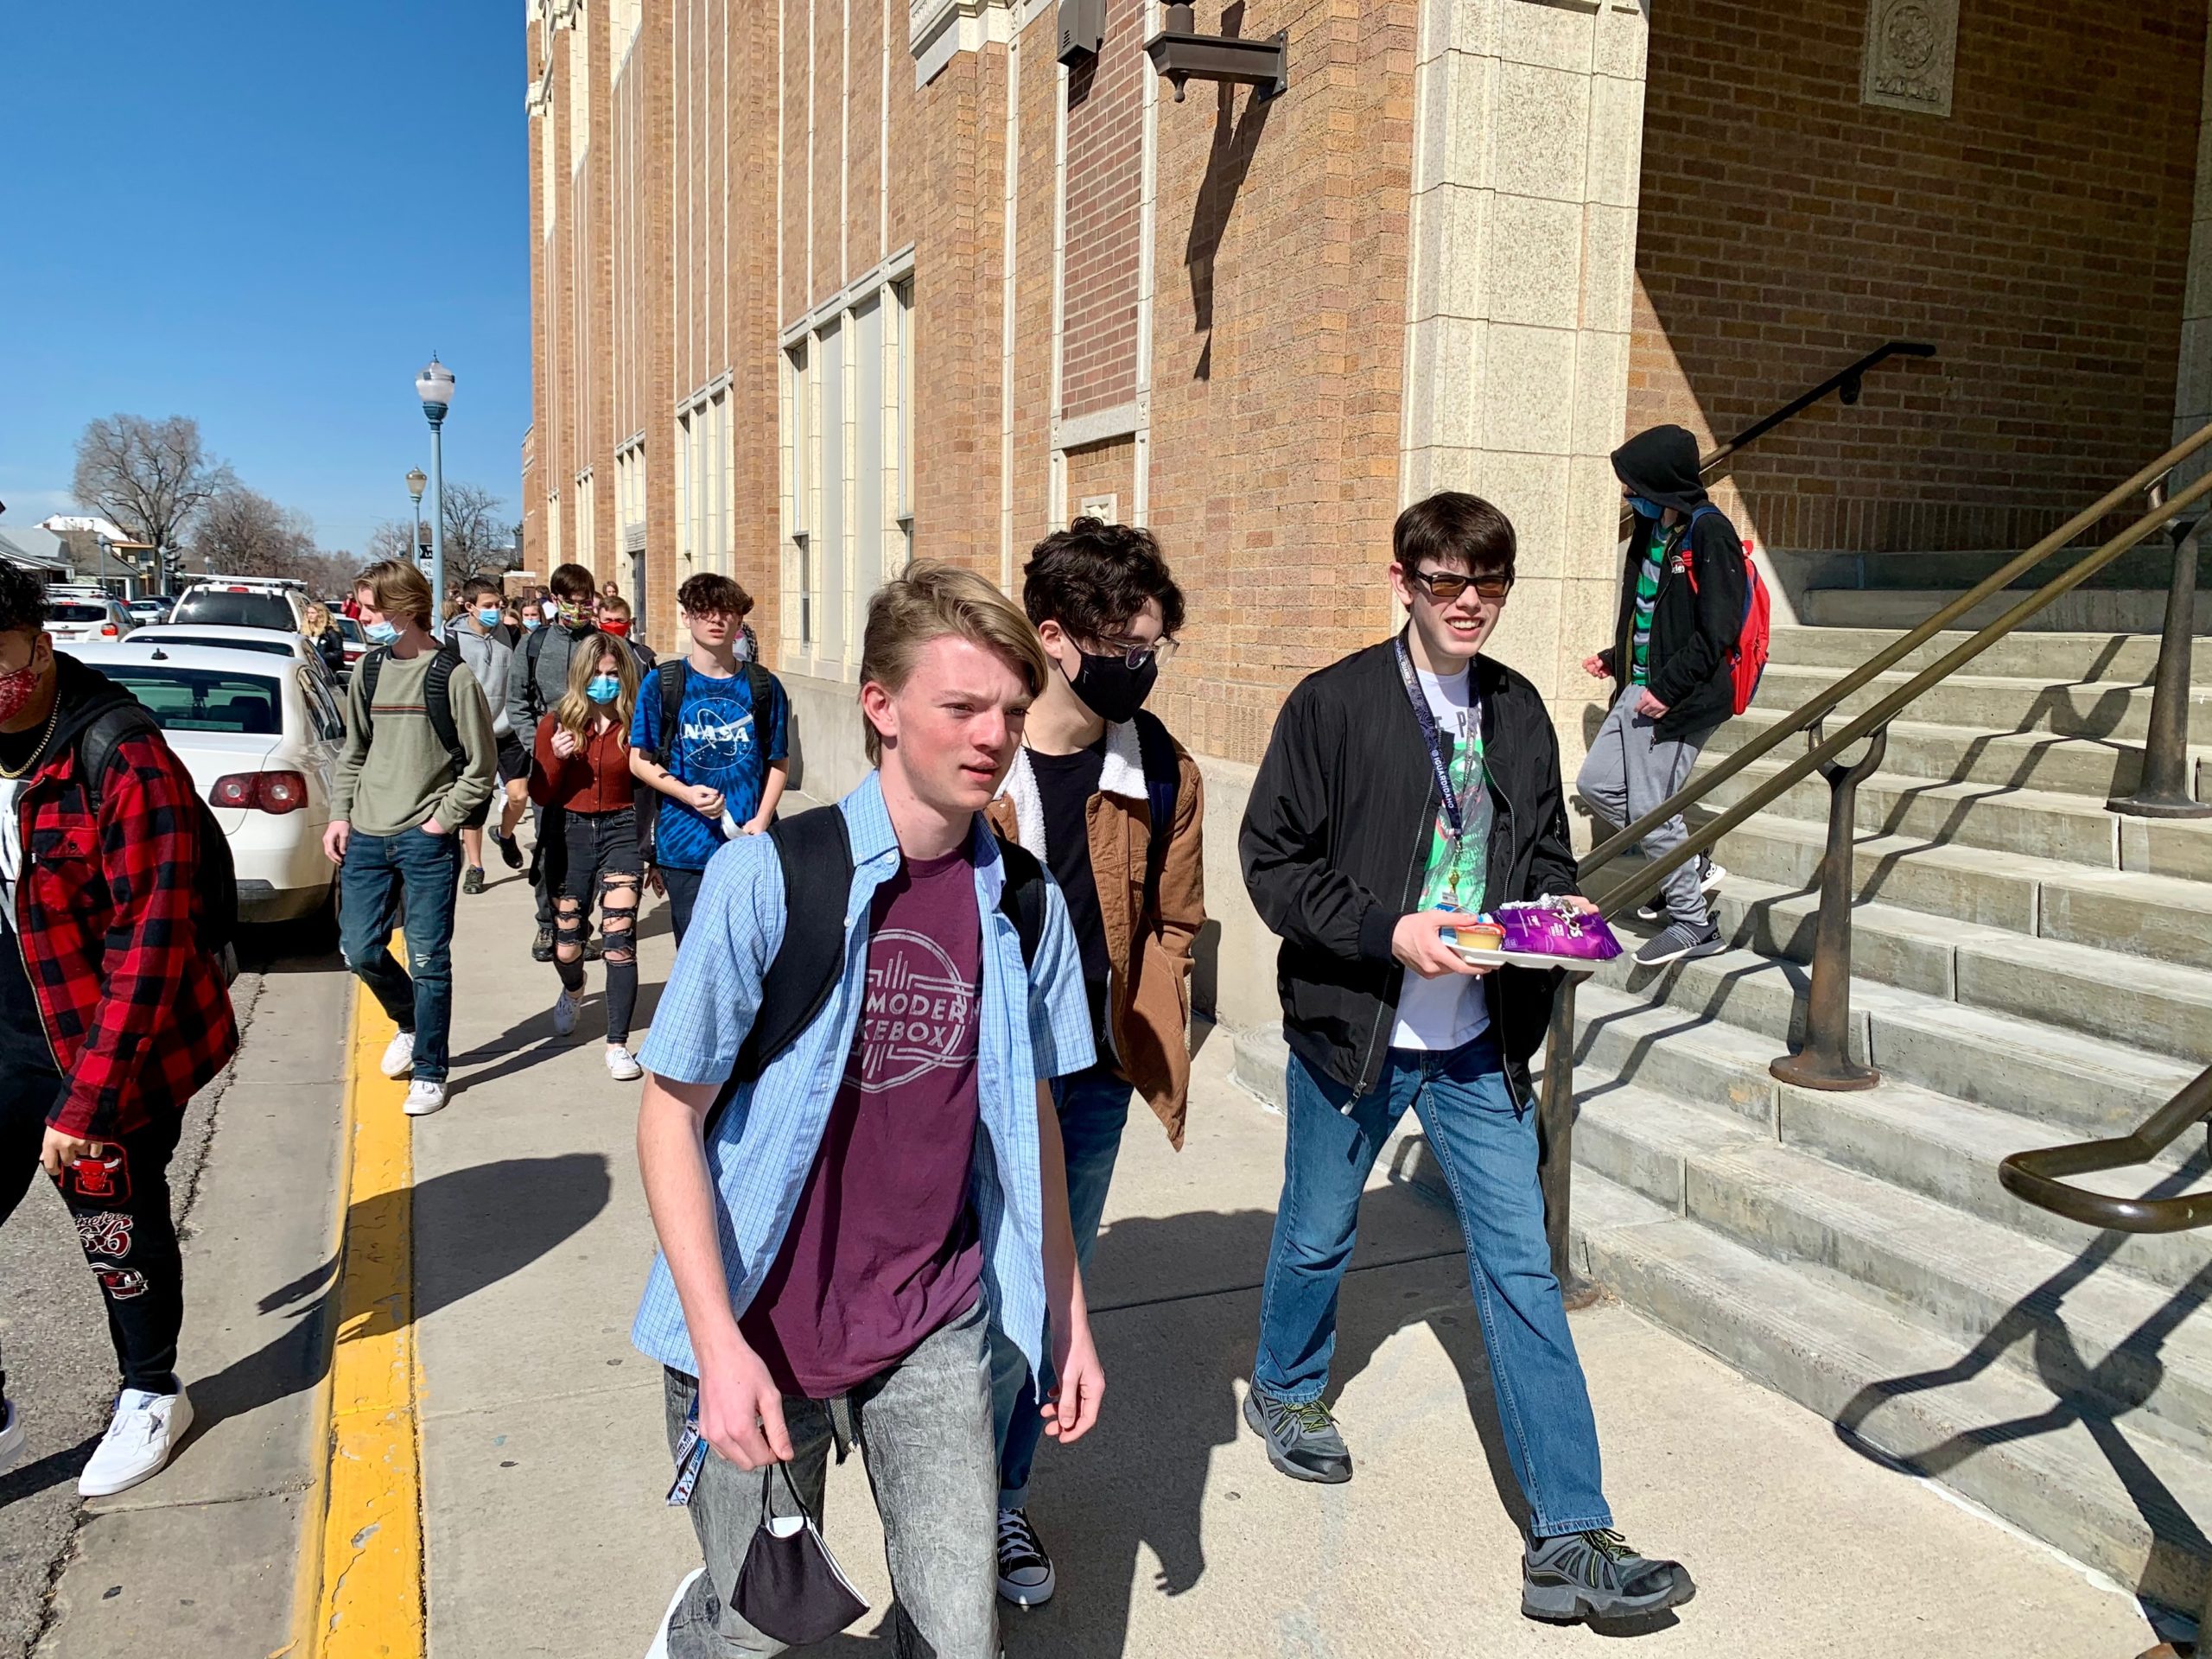 They're back! Pocatello teens return to school